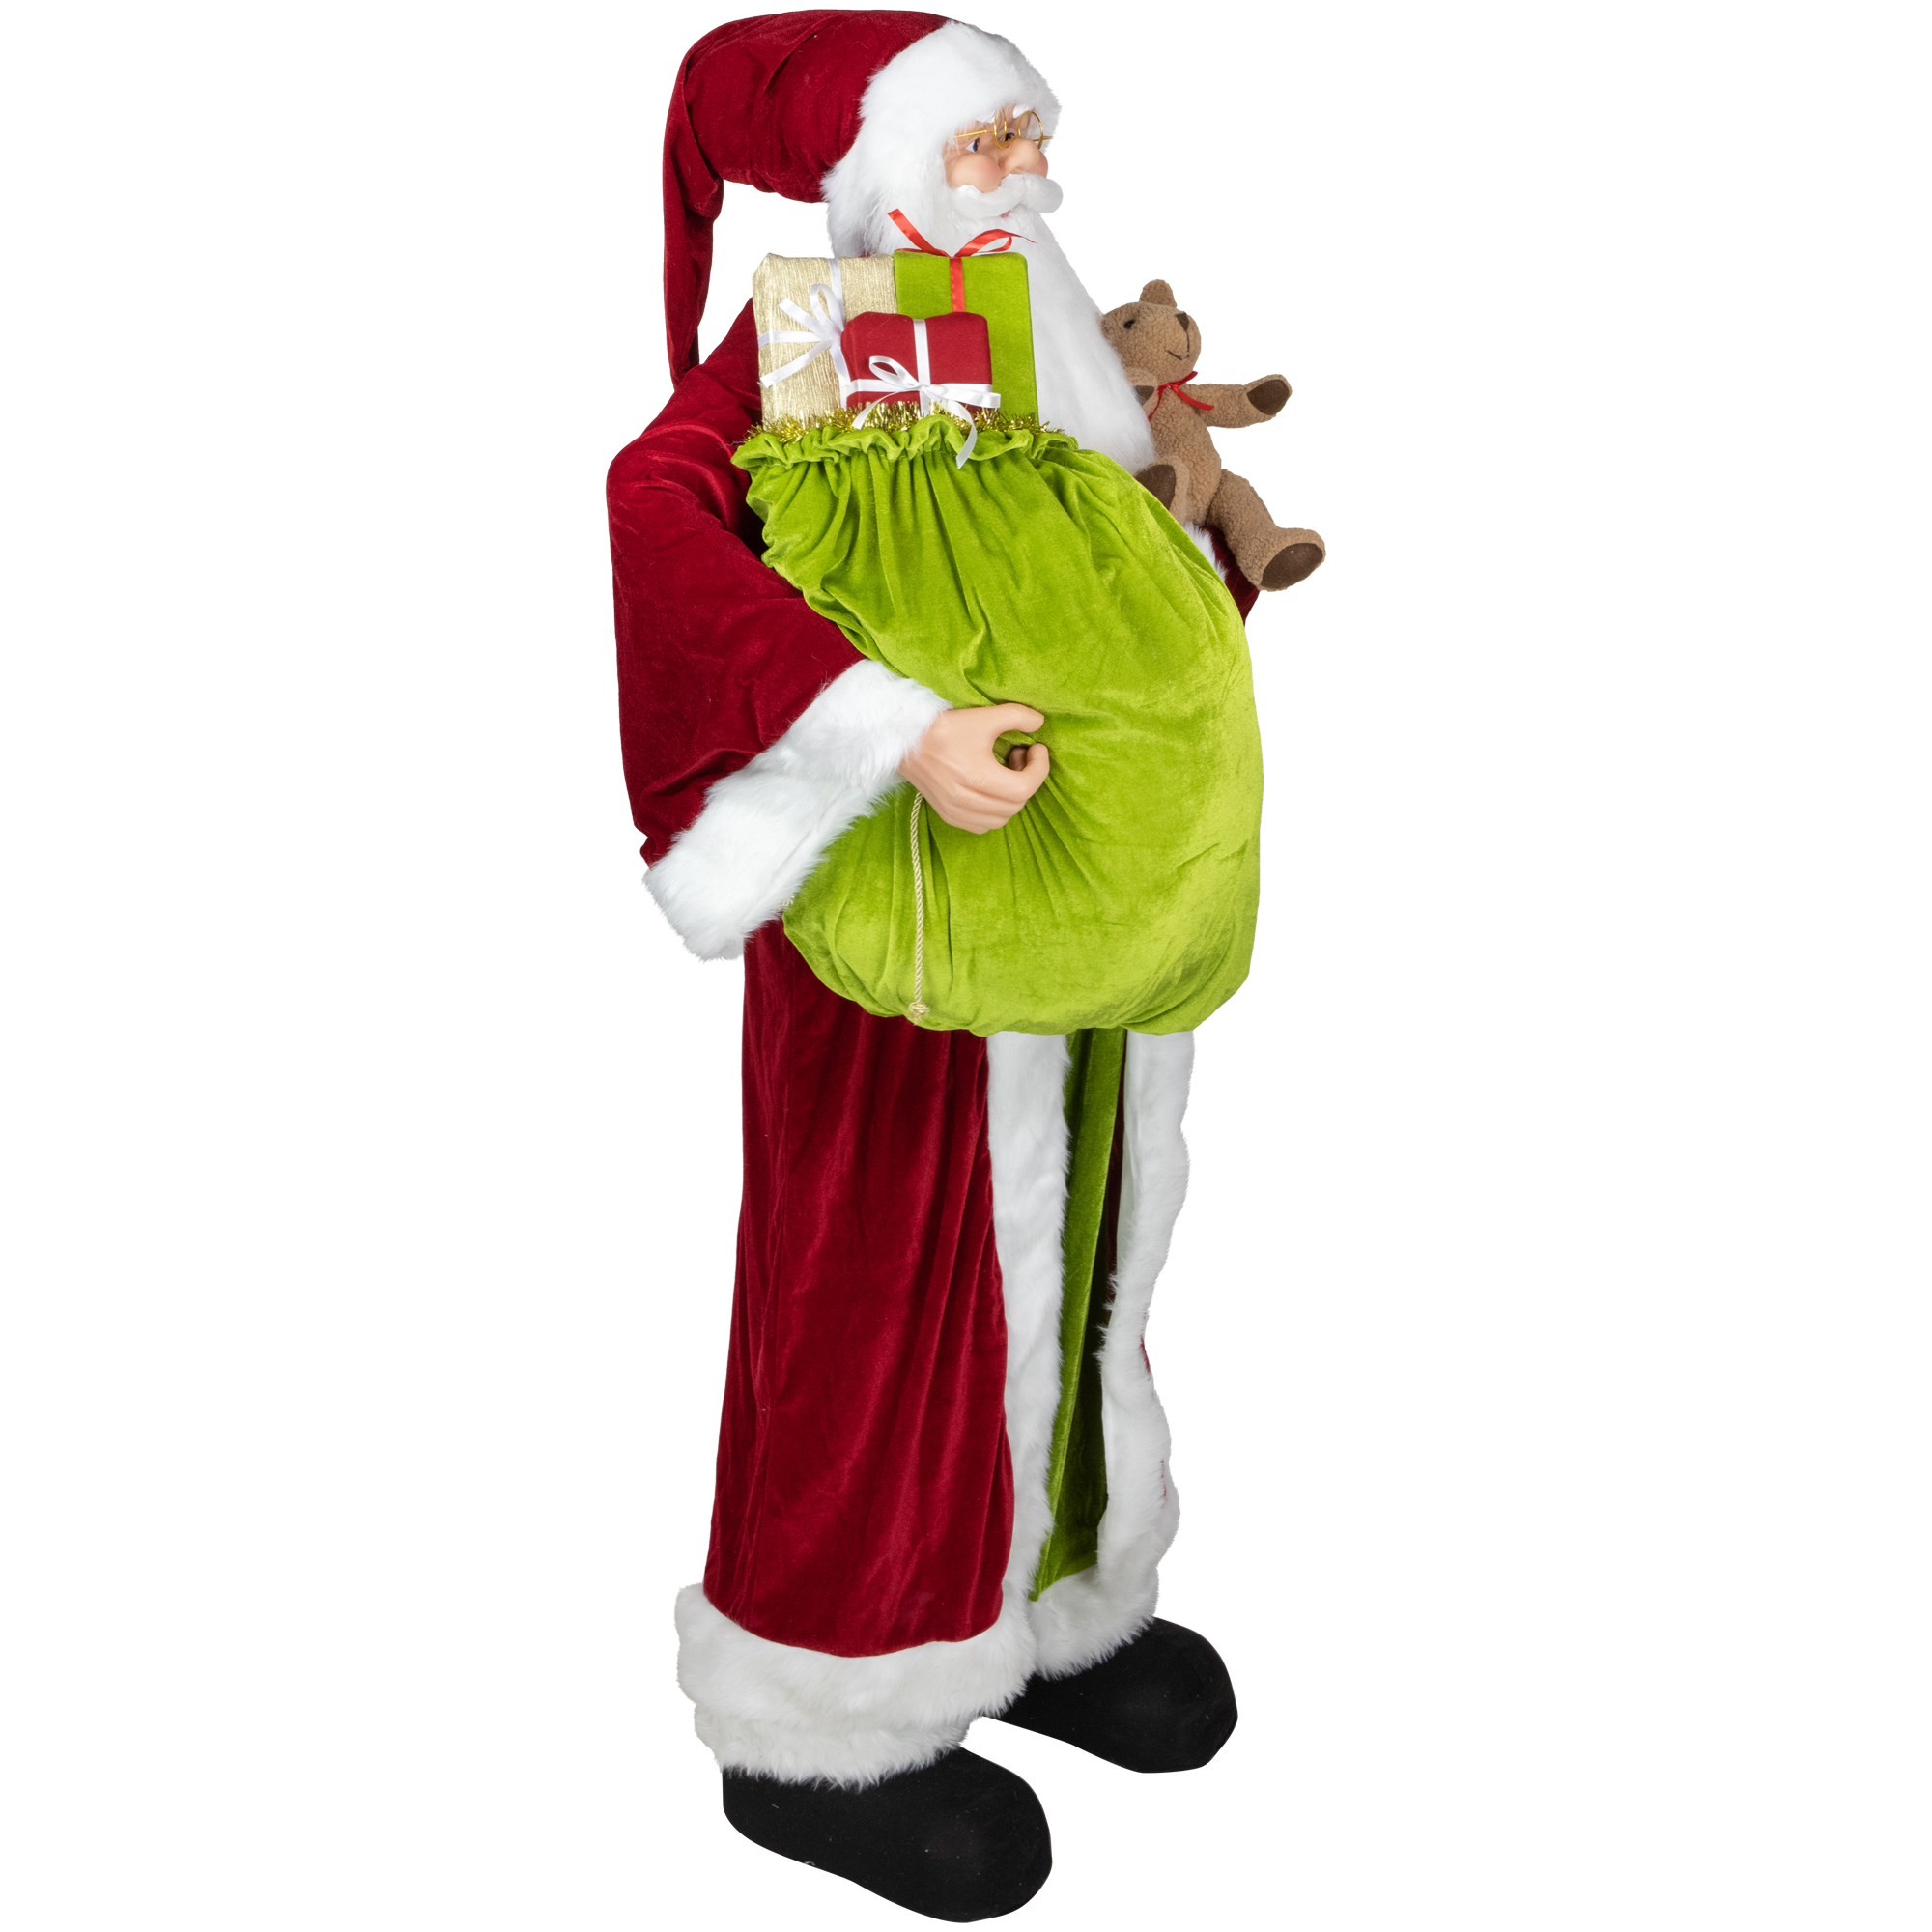 Northlight 72" Plush Santa Claus with Teddy Bear and Gift Bag Christmas Figure